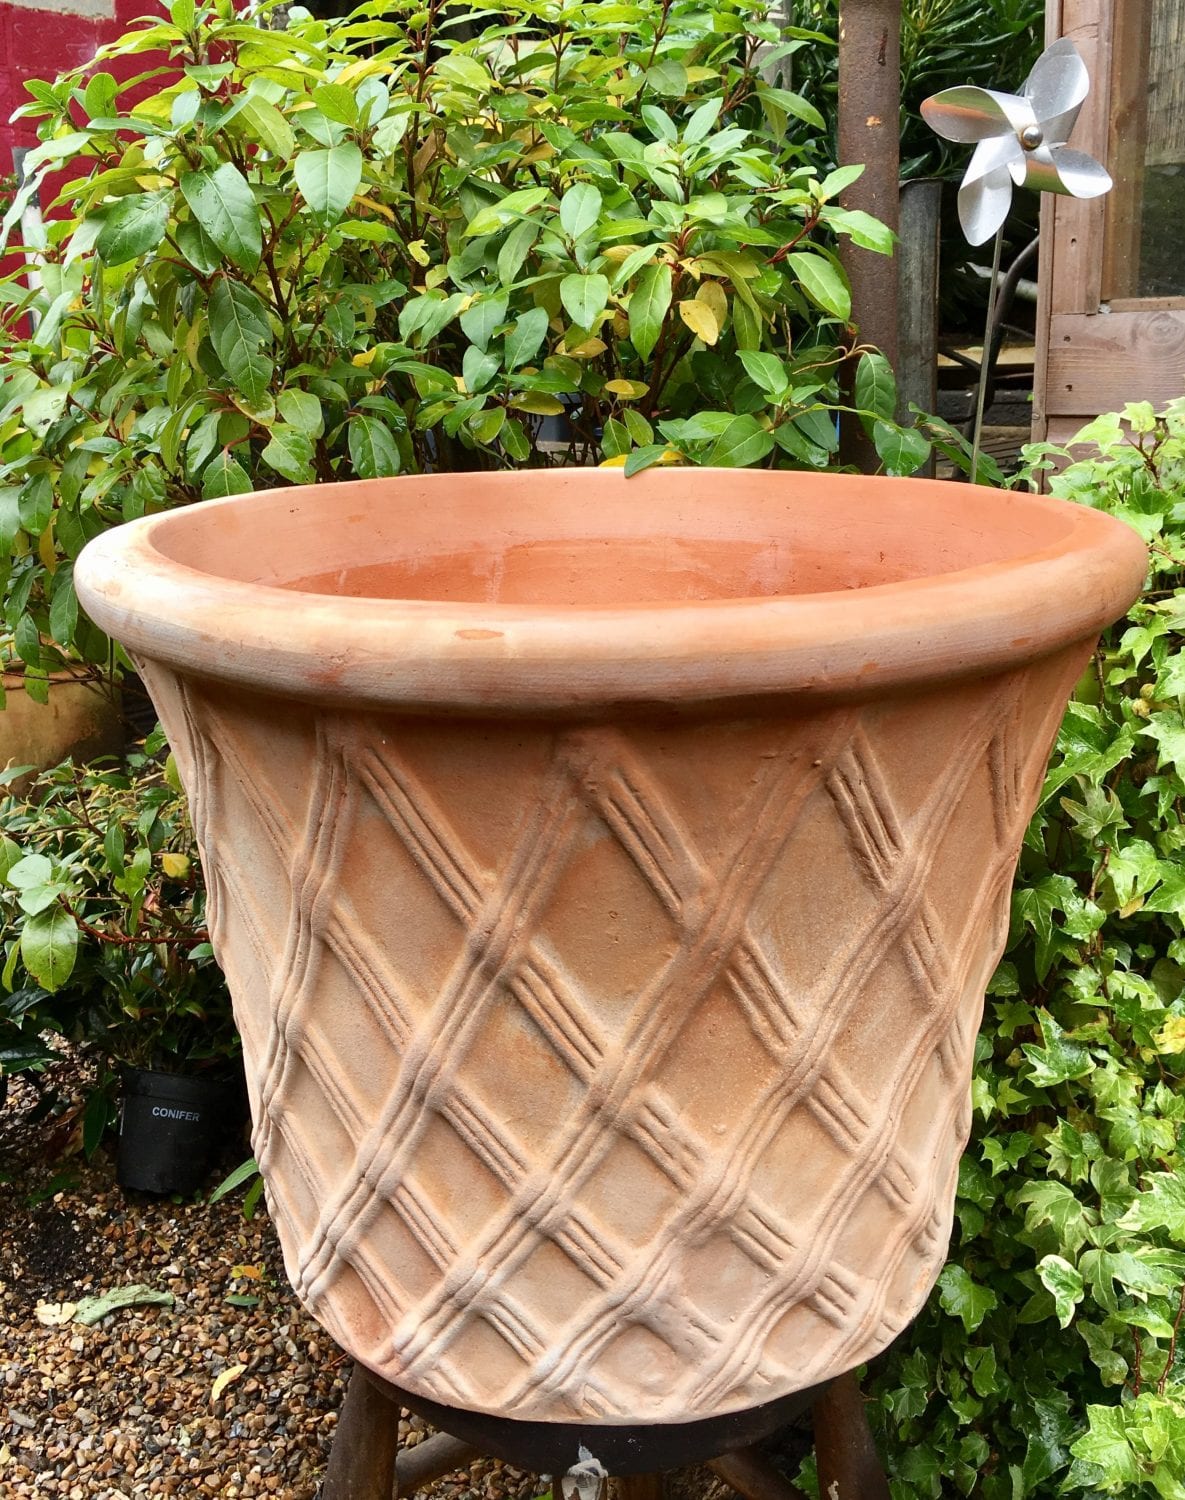 Terracotta Pot with Lattice Motif - Battersea Flower Station